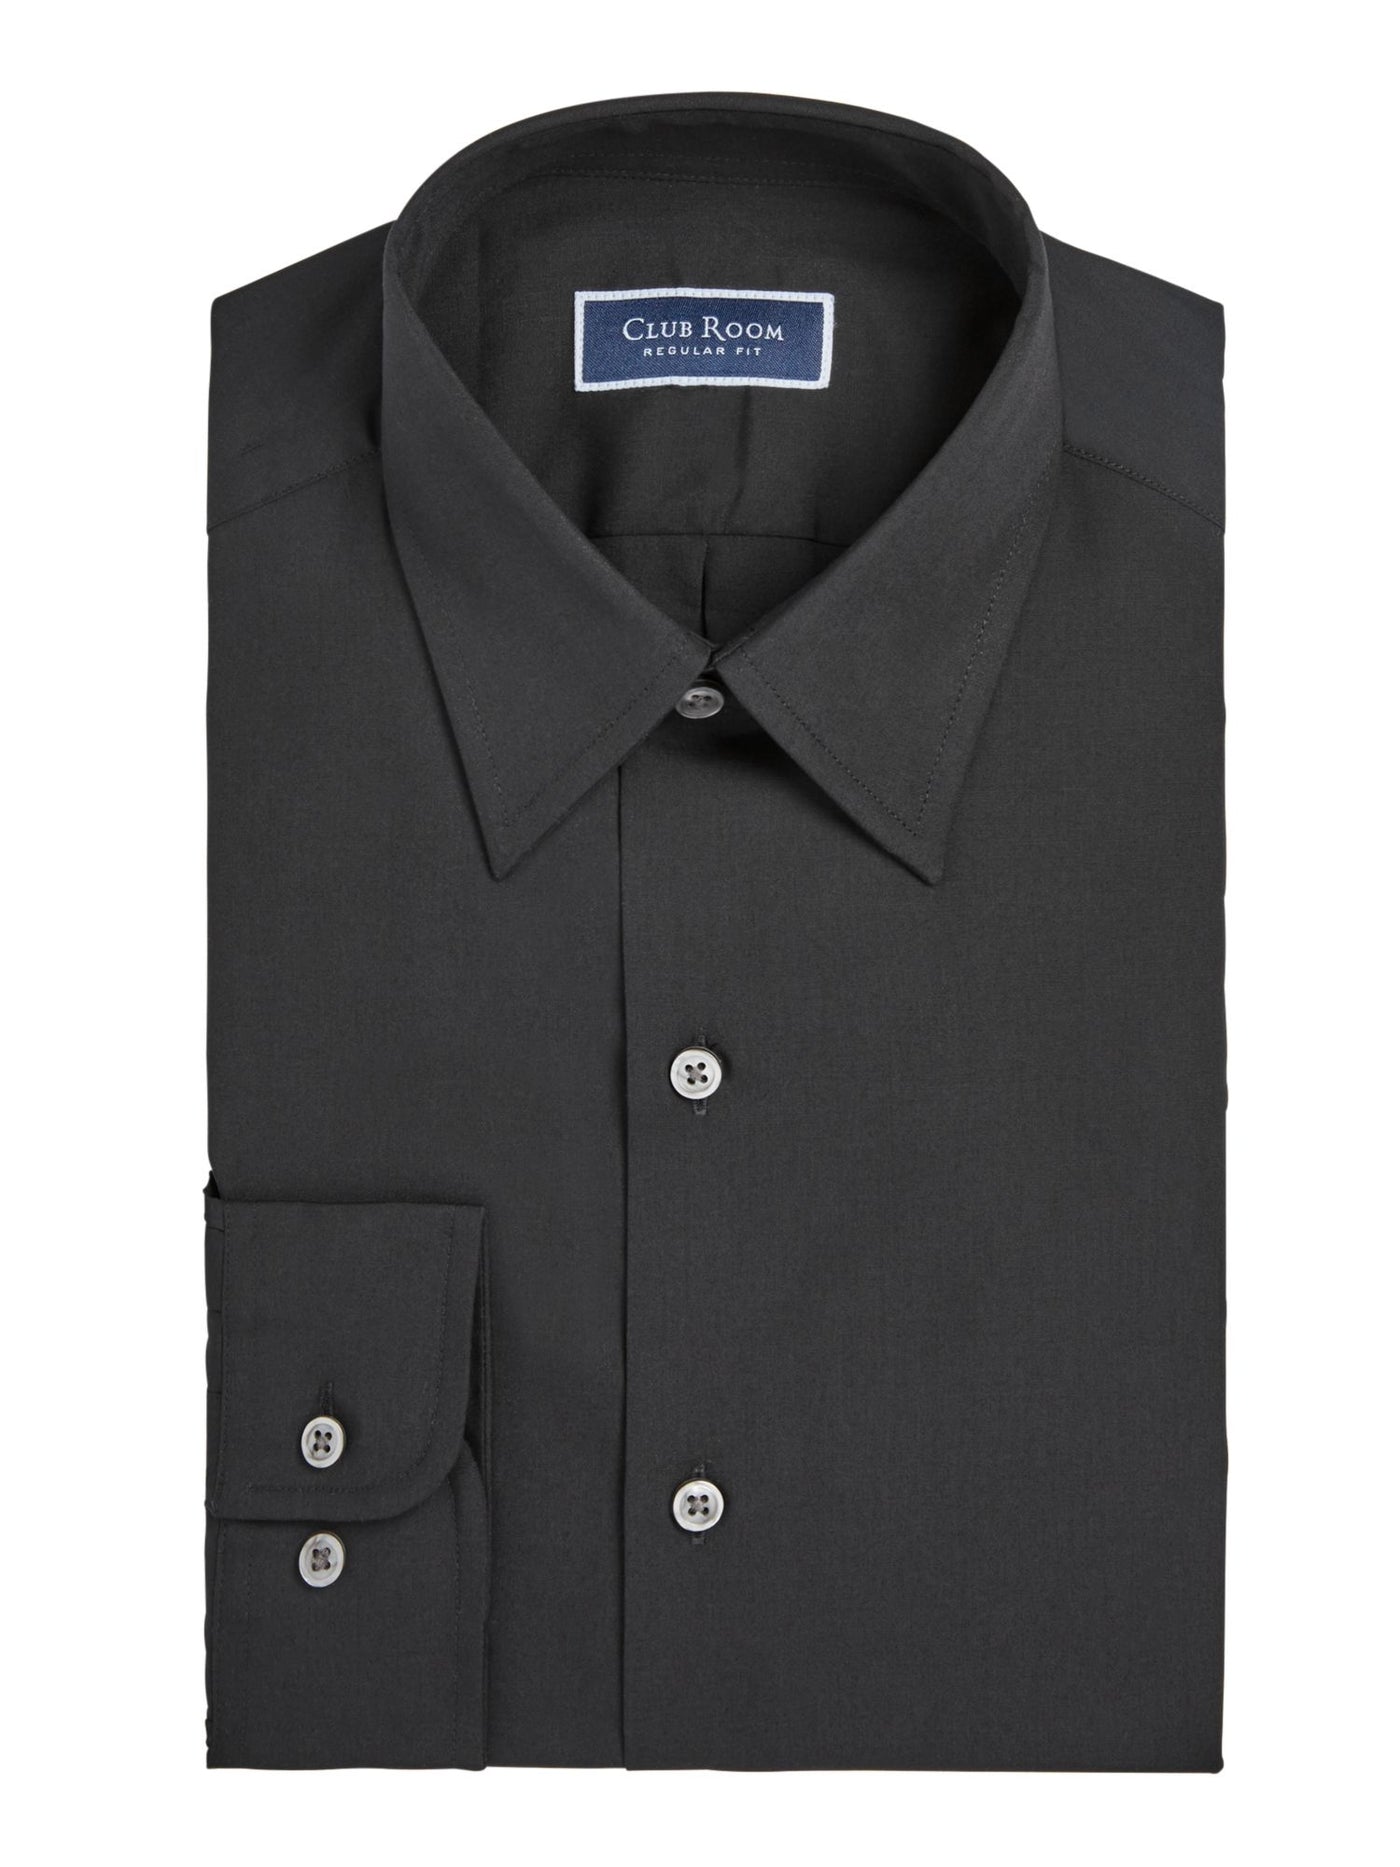 CLUBROOM Mens Black Spread Collar Classic Fit Button Down Shirt 2XL 18.5- 34/35